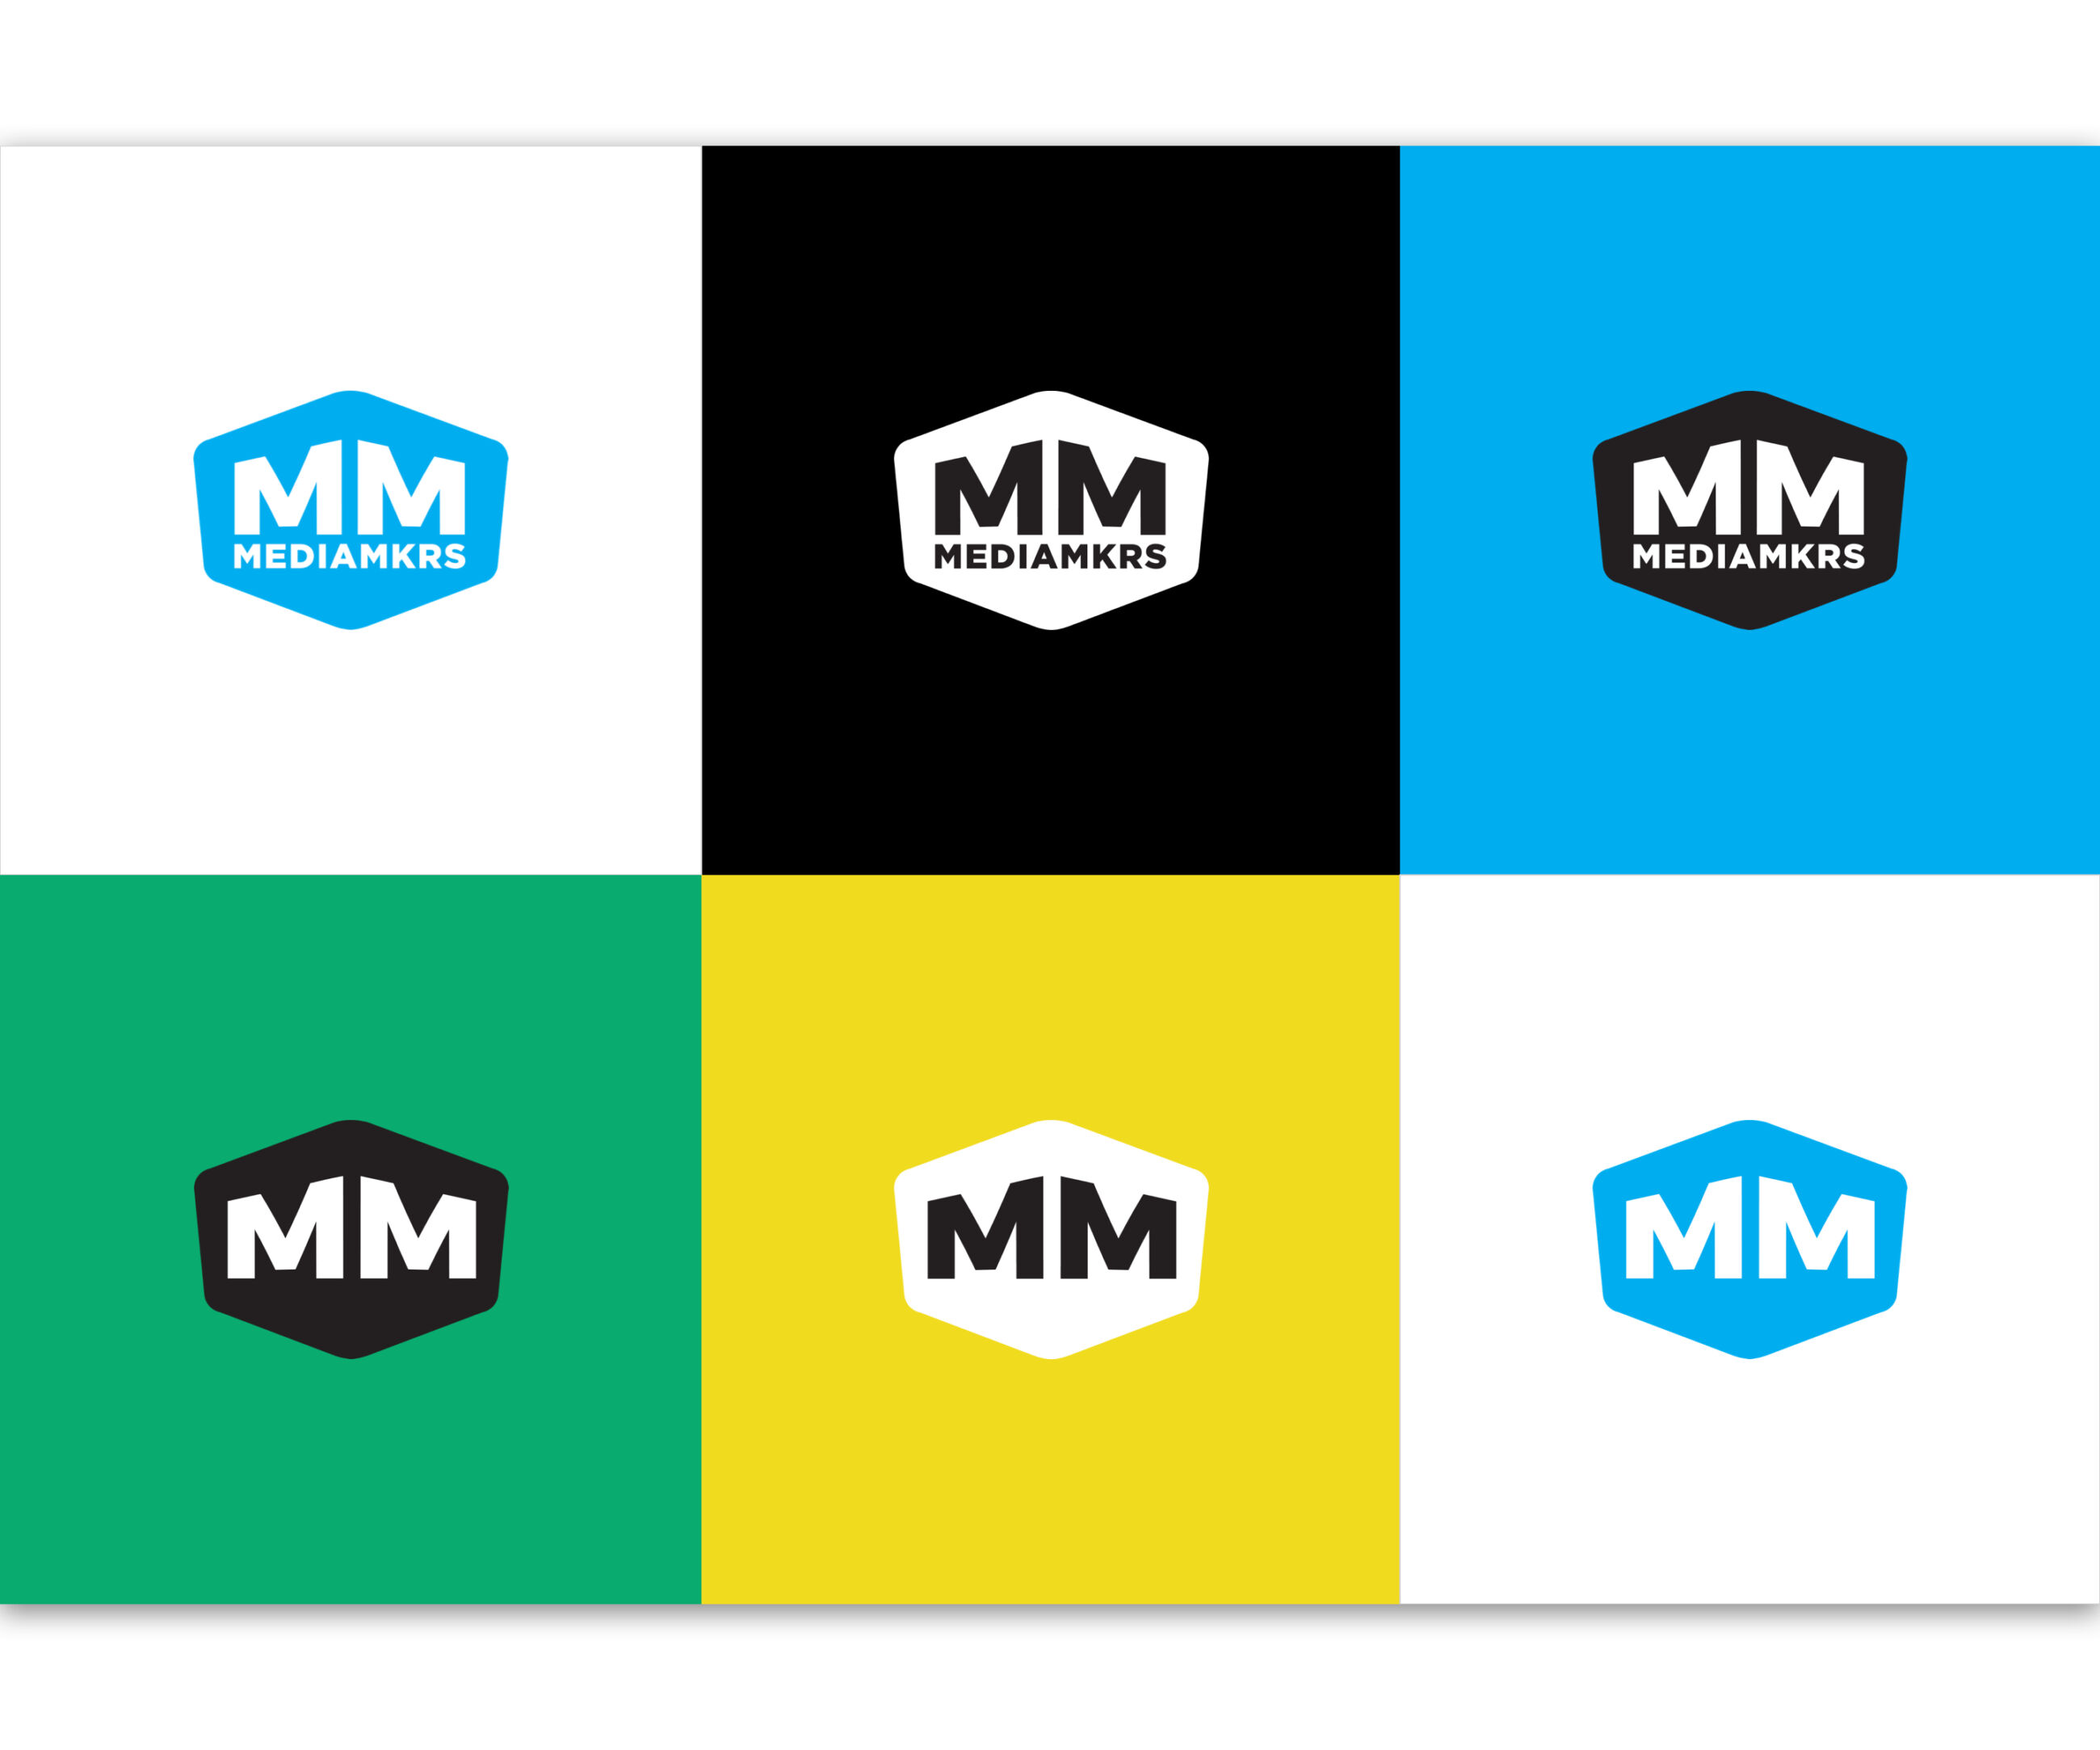 Mediamkrs logo colors